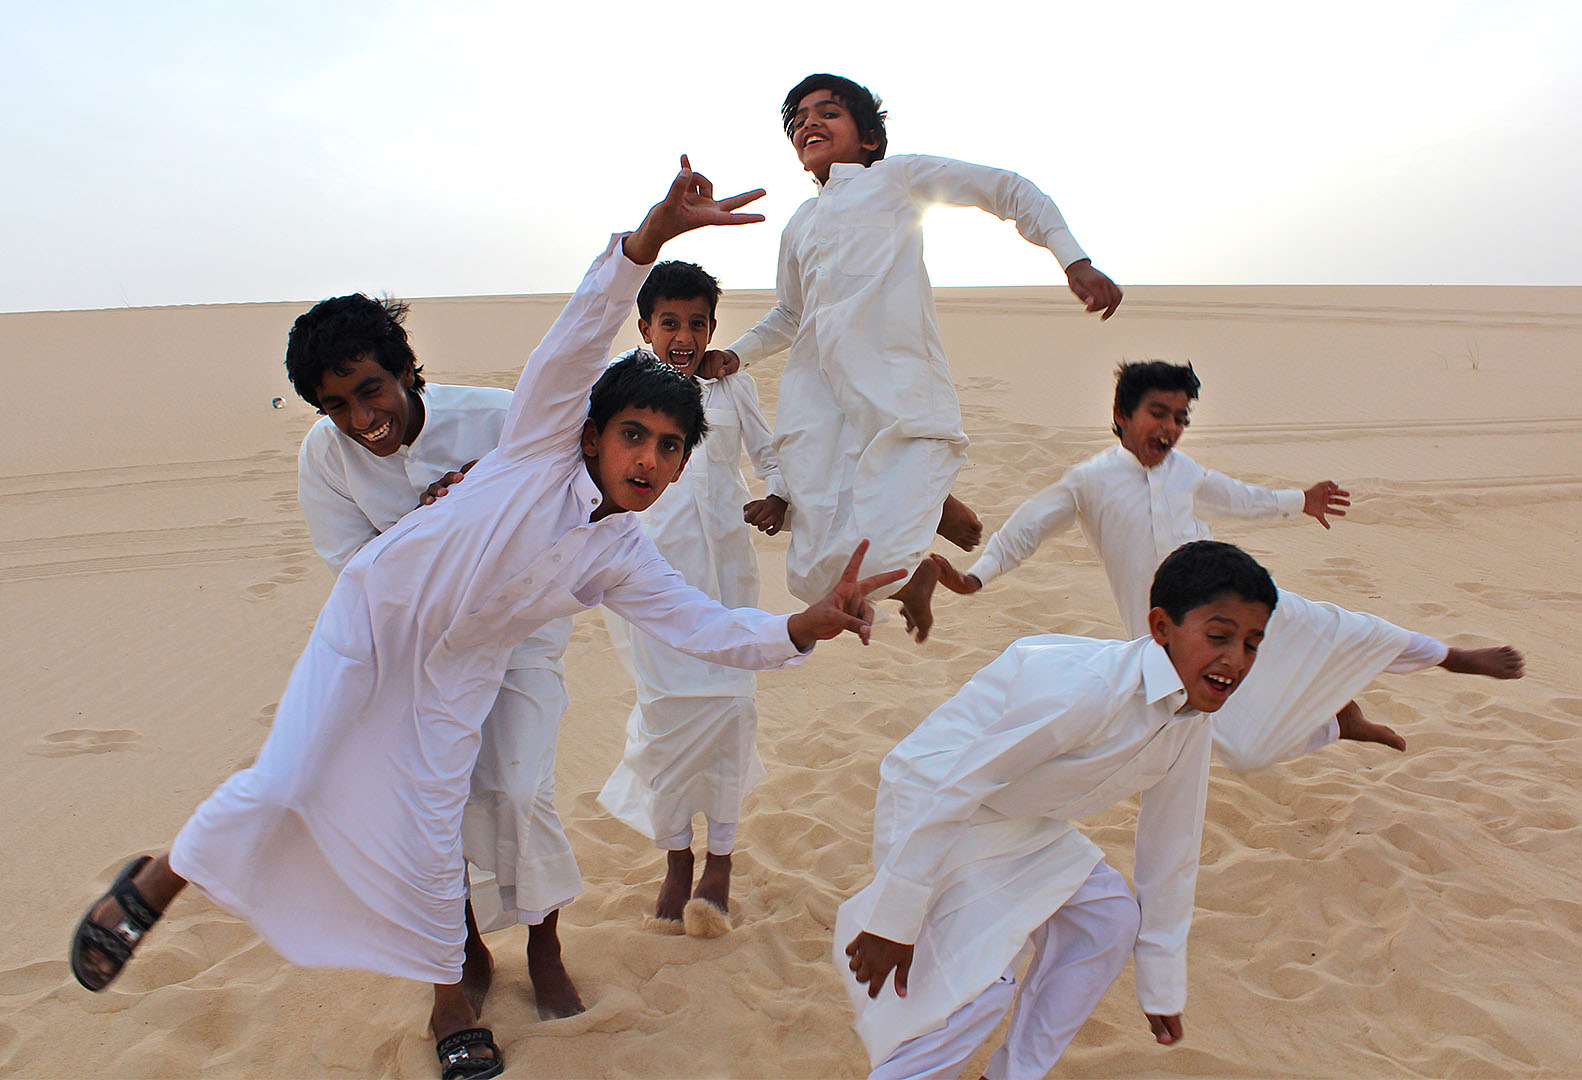 Saudi boys cavort in the desert. Photograph by Gintare Balseviciute '13